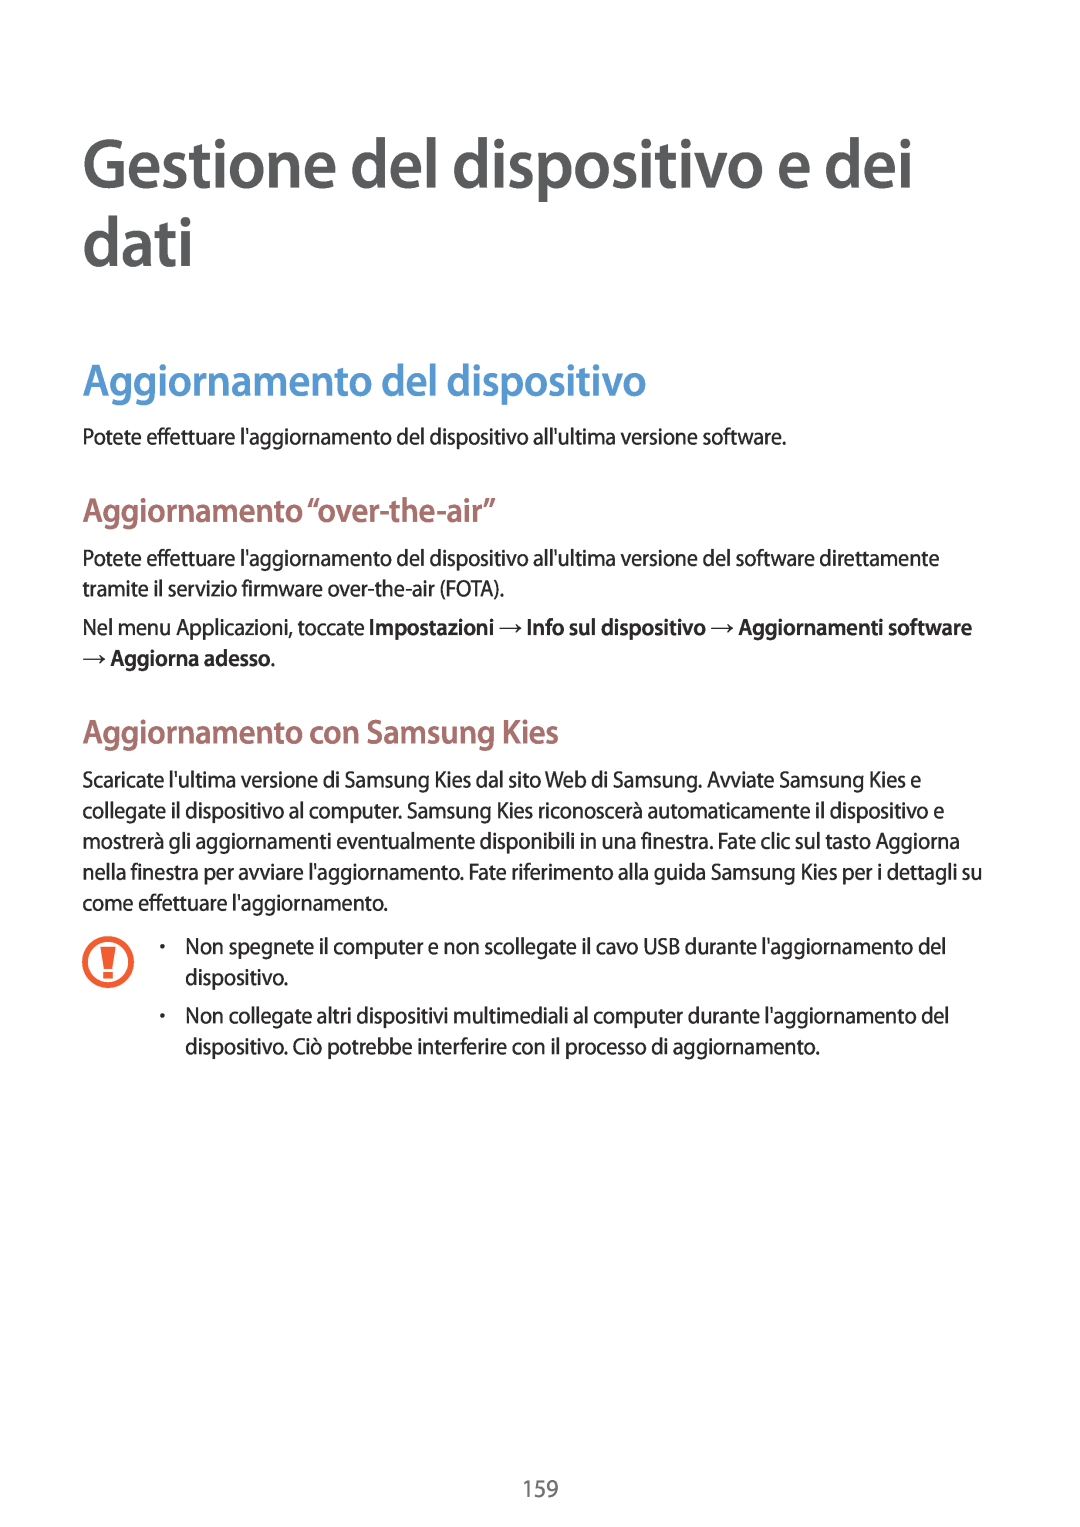 Samsung SM-G900FZBAXEO Gestione del dispositivo e dei dati, Aggiornamento del dispositivo, Aggiornamento “over-the-air” 